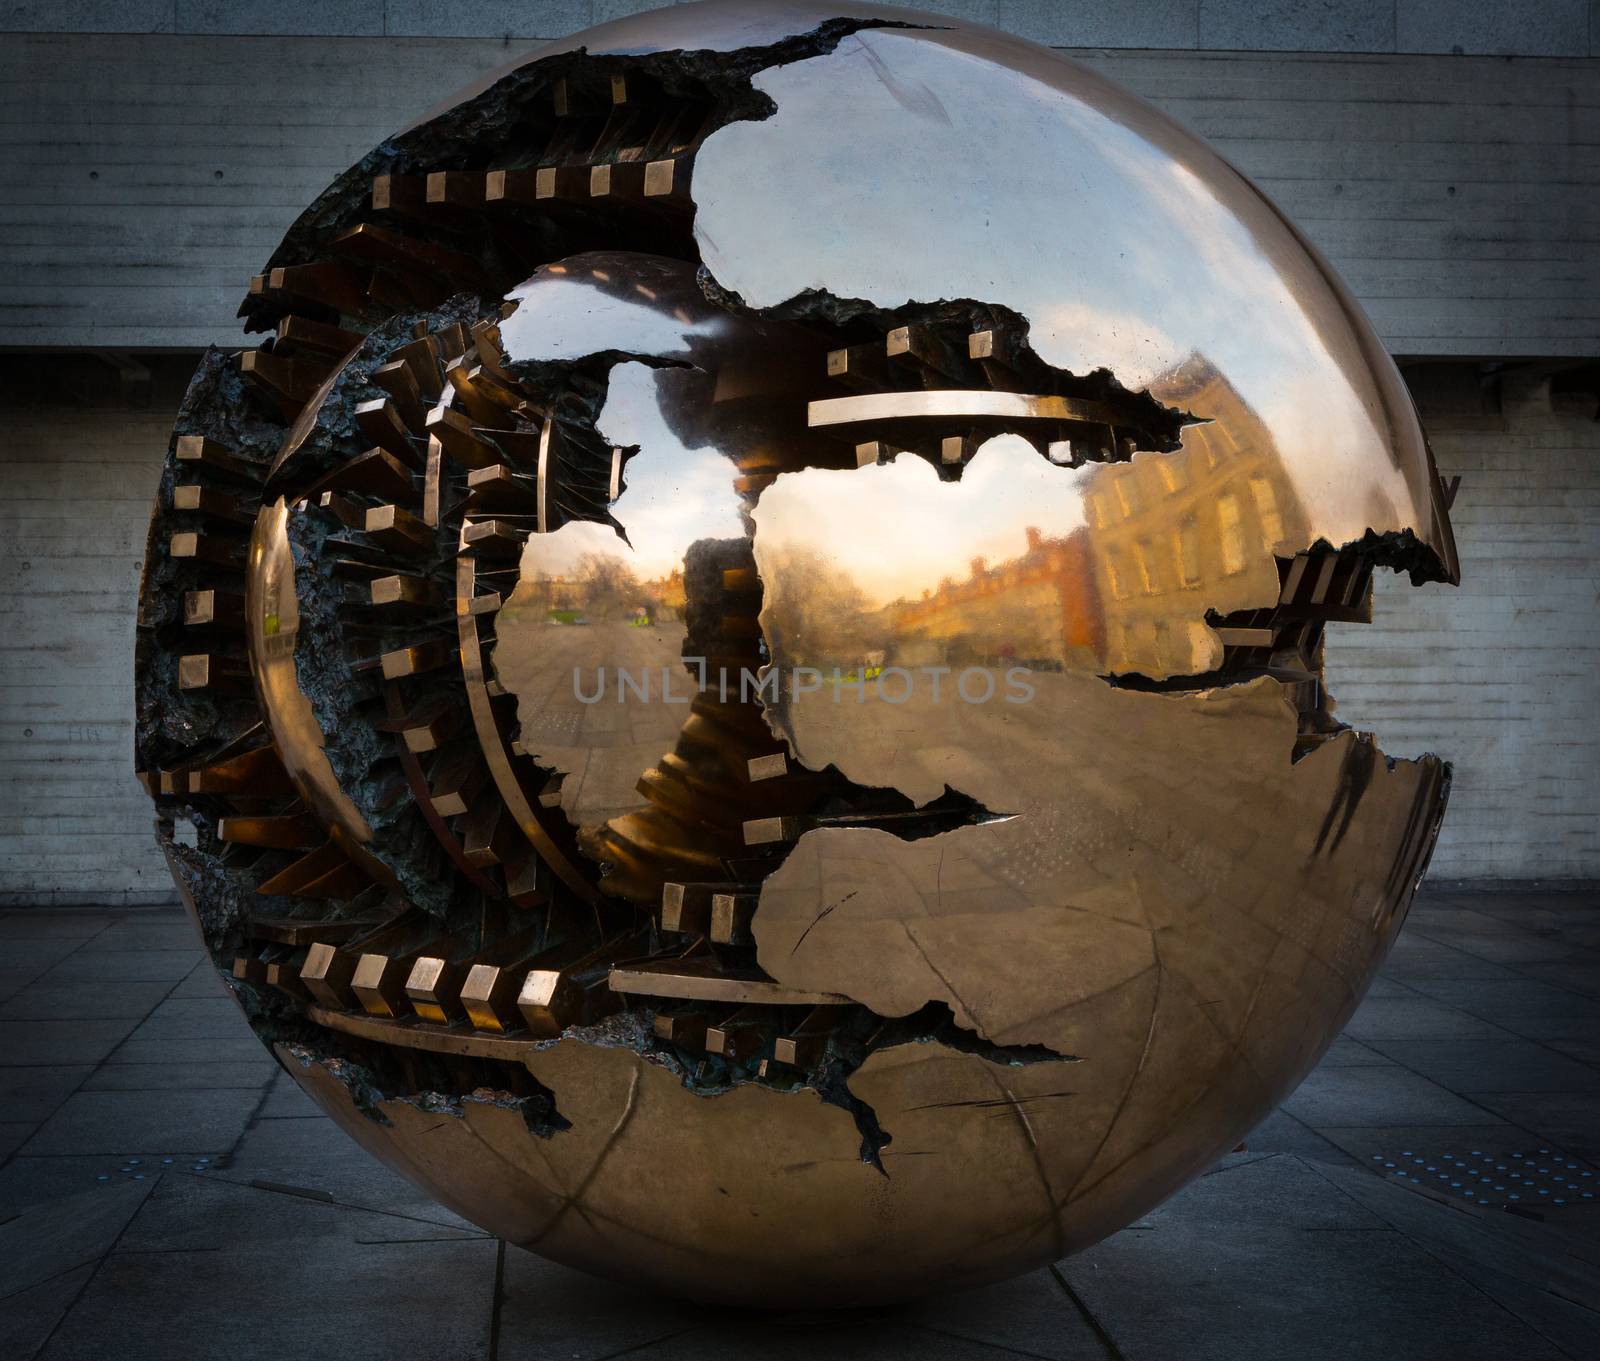 DUBLIN, IRELAND - JAN 20, 2017: Sphere Within Sphere is a bronze sculpture in Trinity